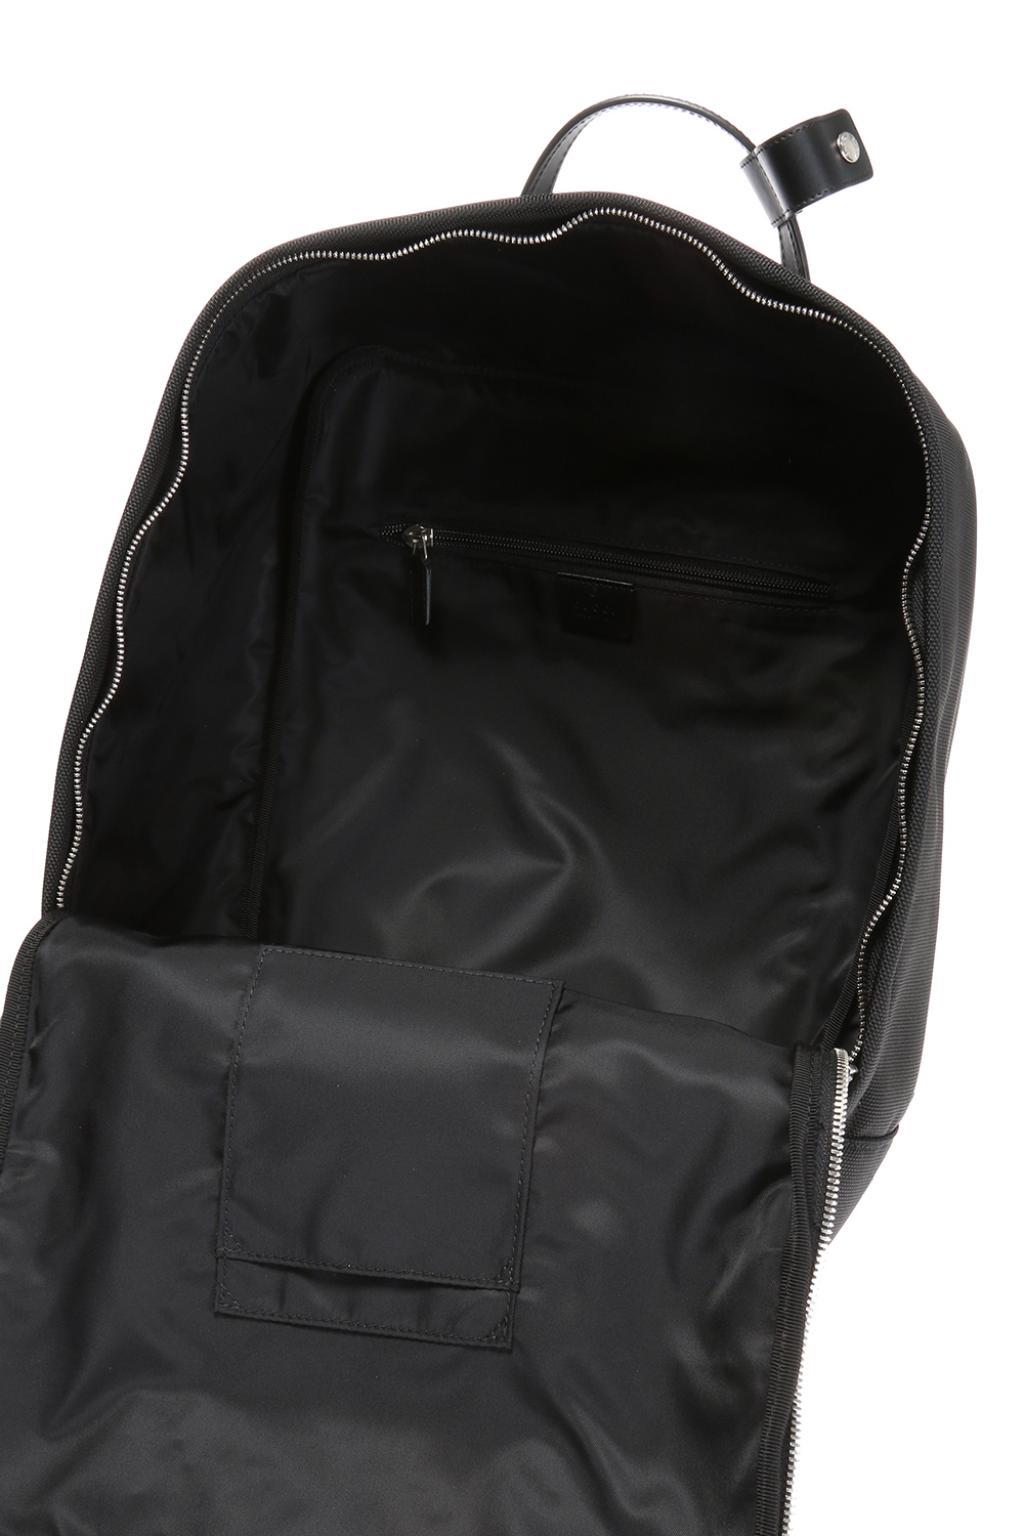 GUCCI Techno Canvas Web Backpack Black 1146476